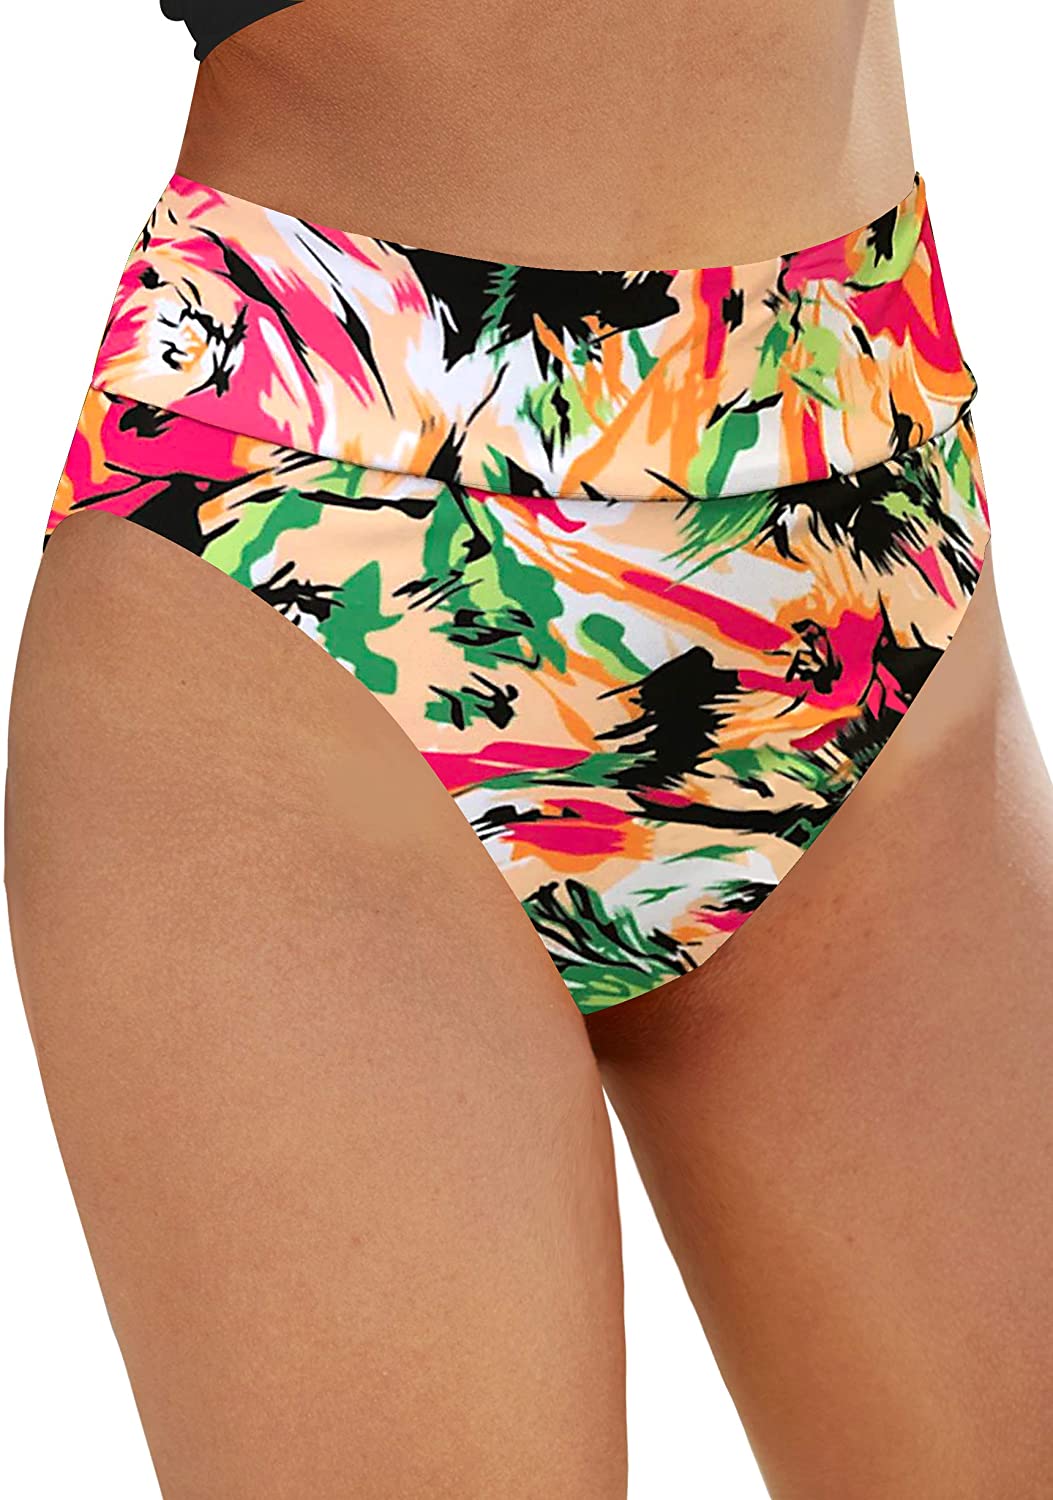 thumbnail 8 - Upopby Women&#039;s Sexy High Cut Cheeky Bikini Bottom High Waisted Swimsuit Bottoms